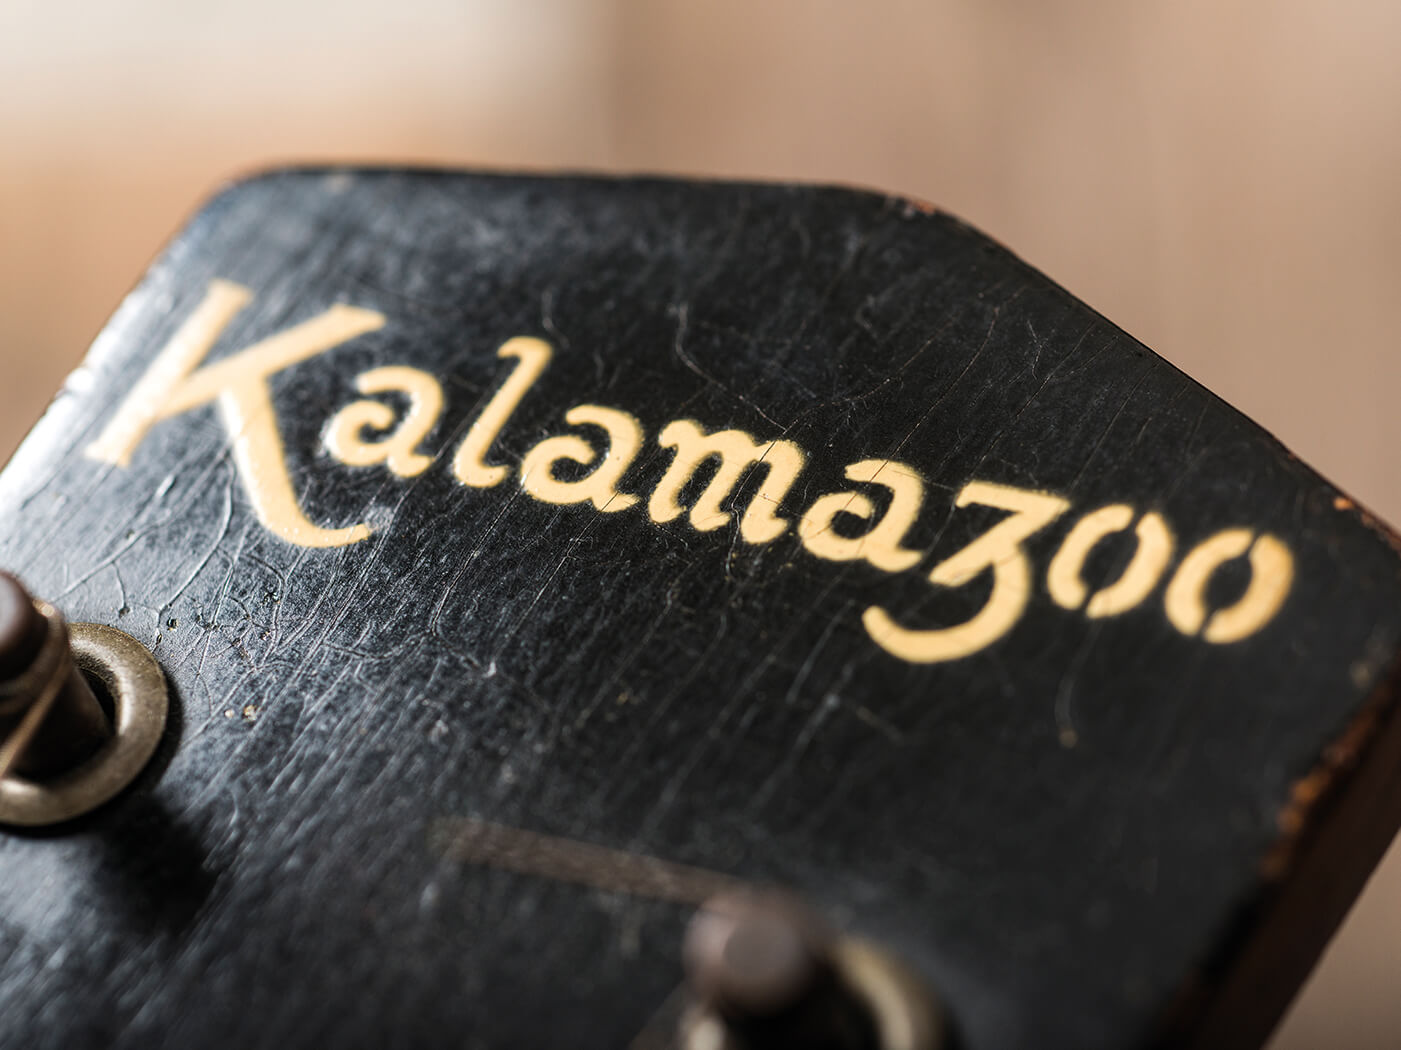 Kalamazoo KG-14 headstock landscape